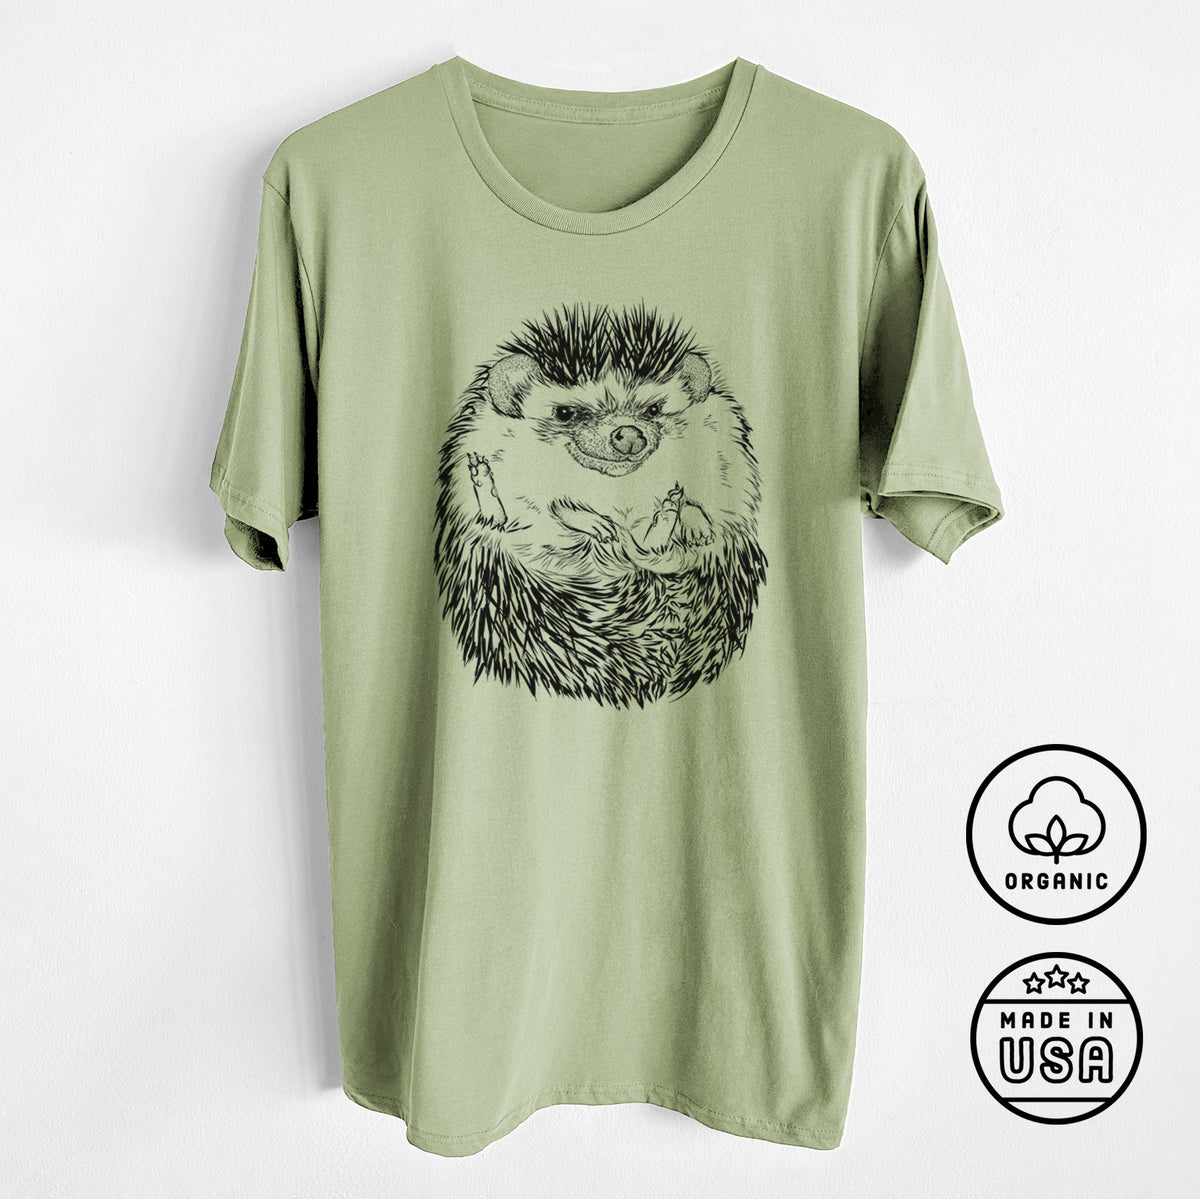 African Pygmy Hedgehog - Atelerix albiventris - Unisex Crewneck - Made in USA - 100% Organic Cotton